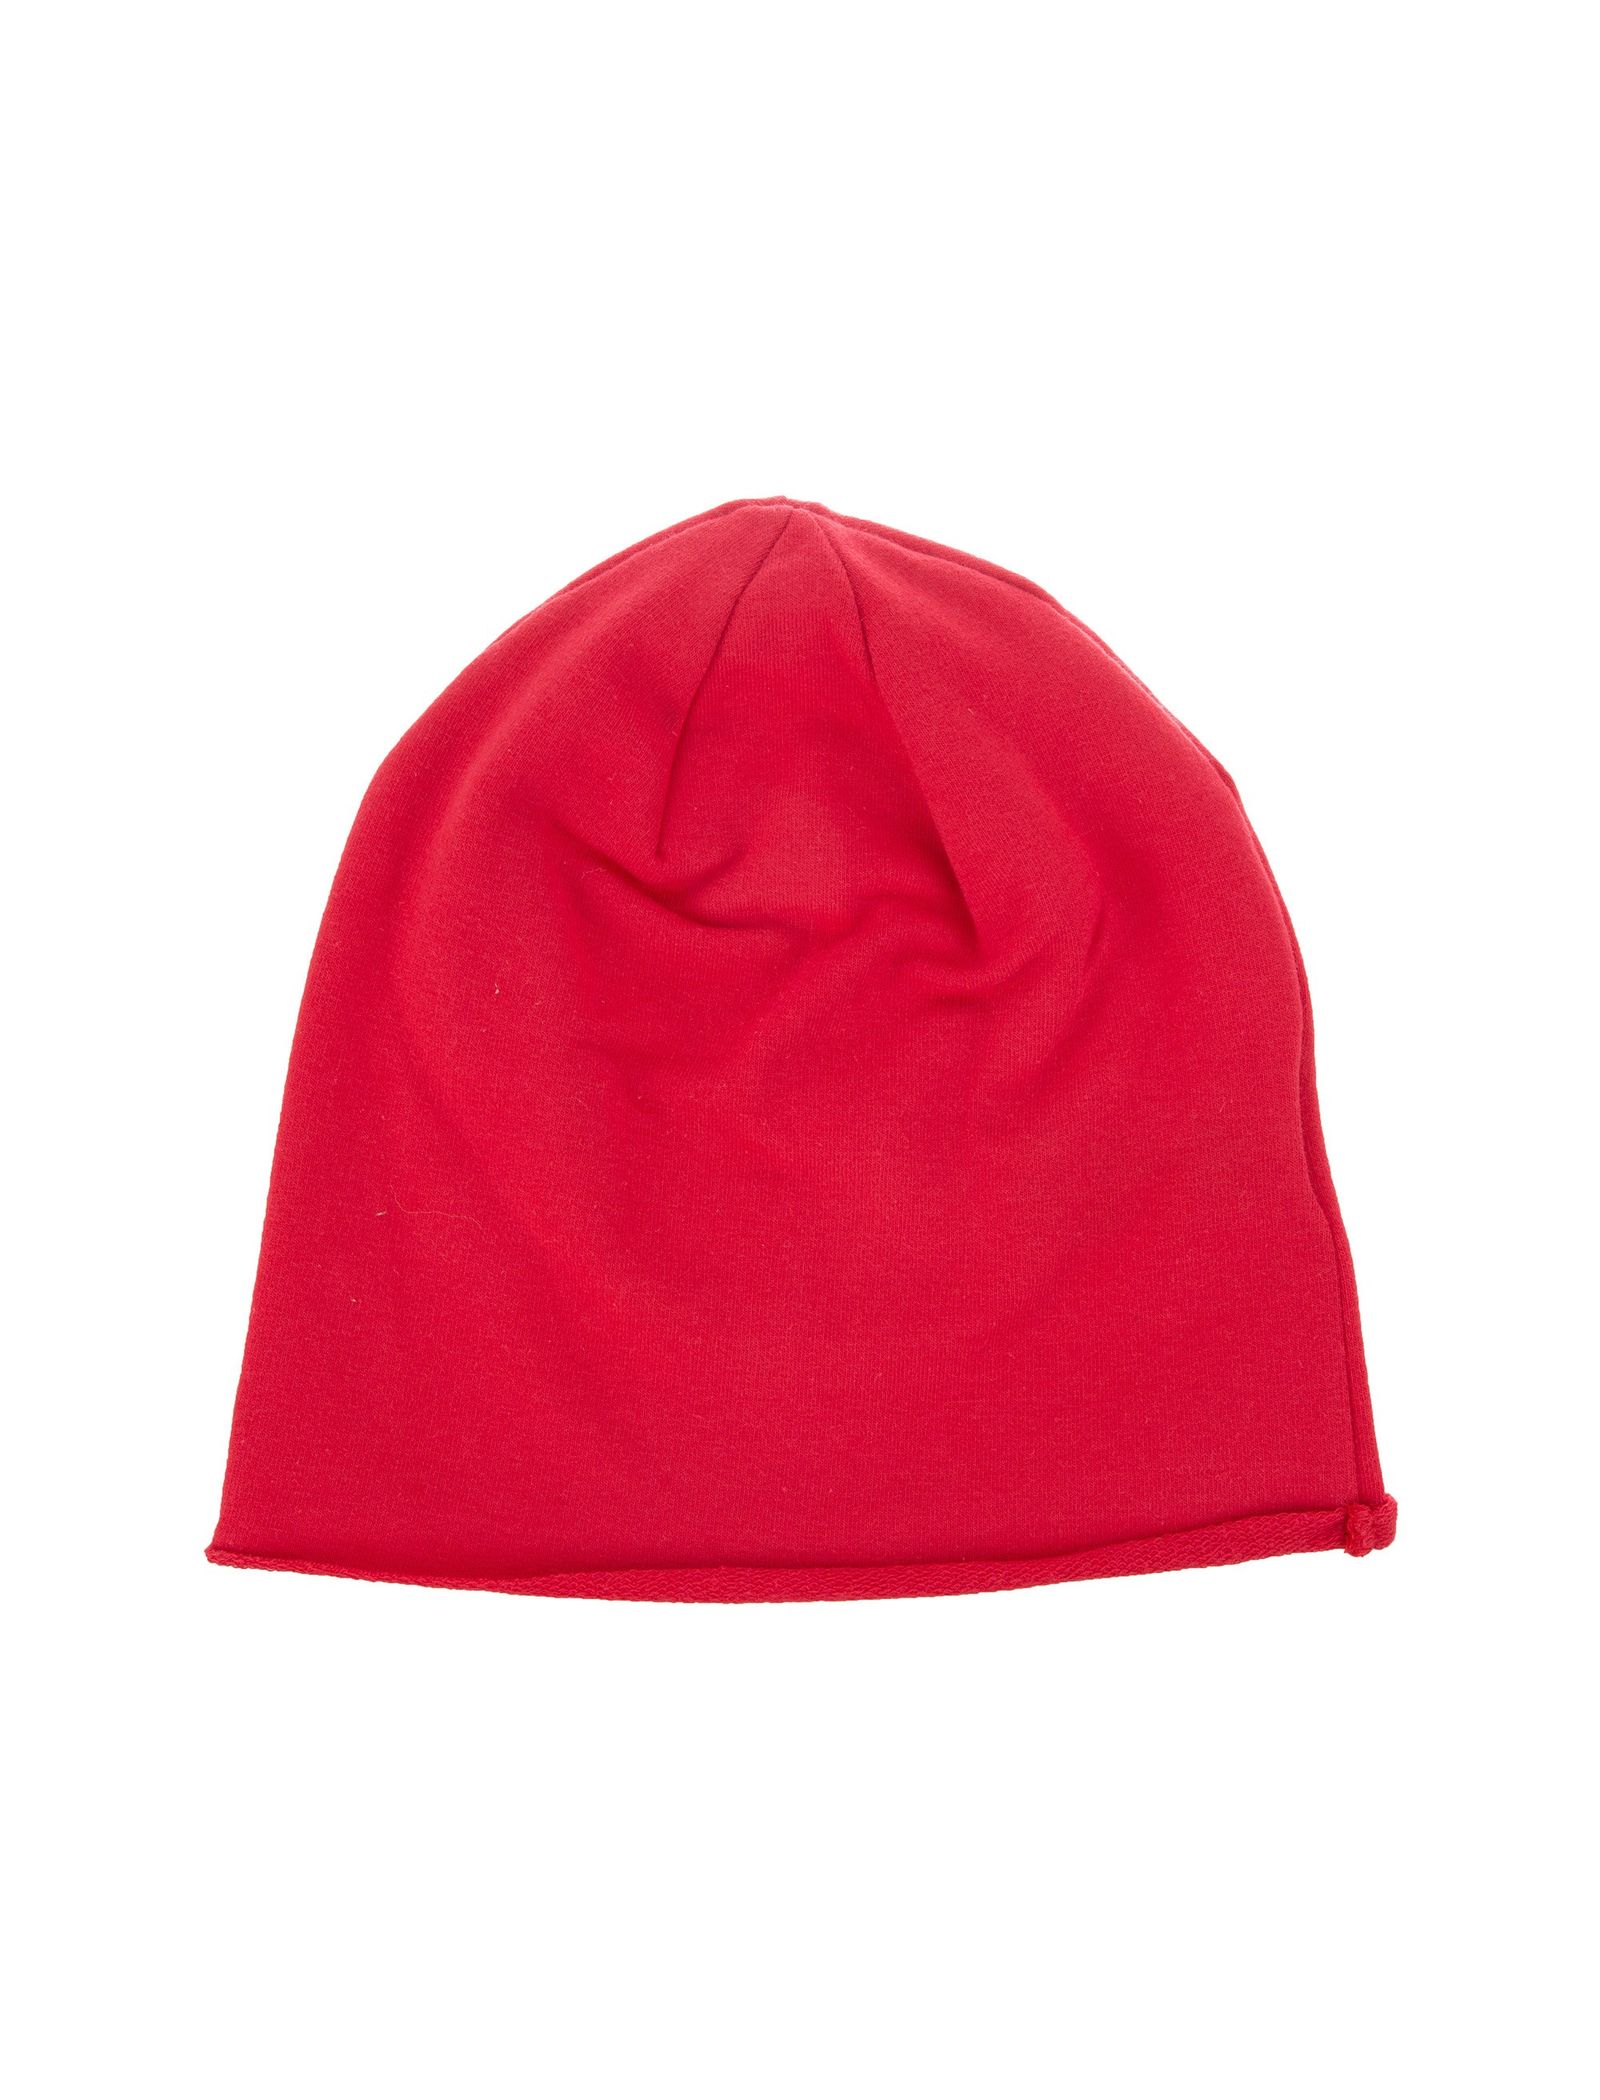 کلاه نخی بانی نوزادی پسرانه - بلوکیدز - قرمز - 3